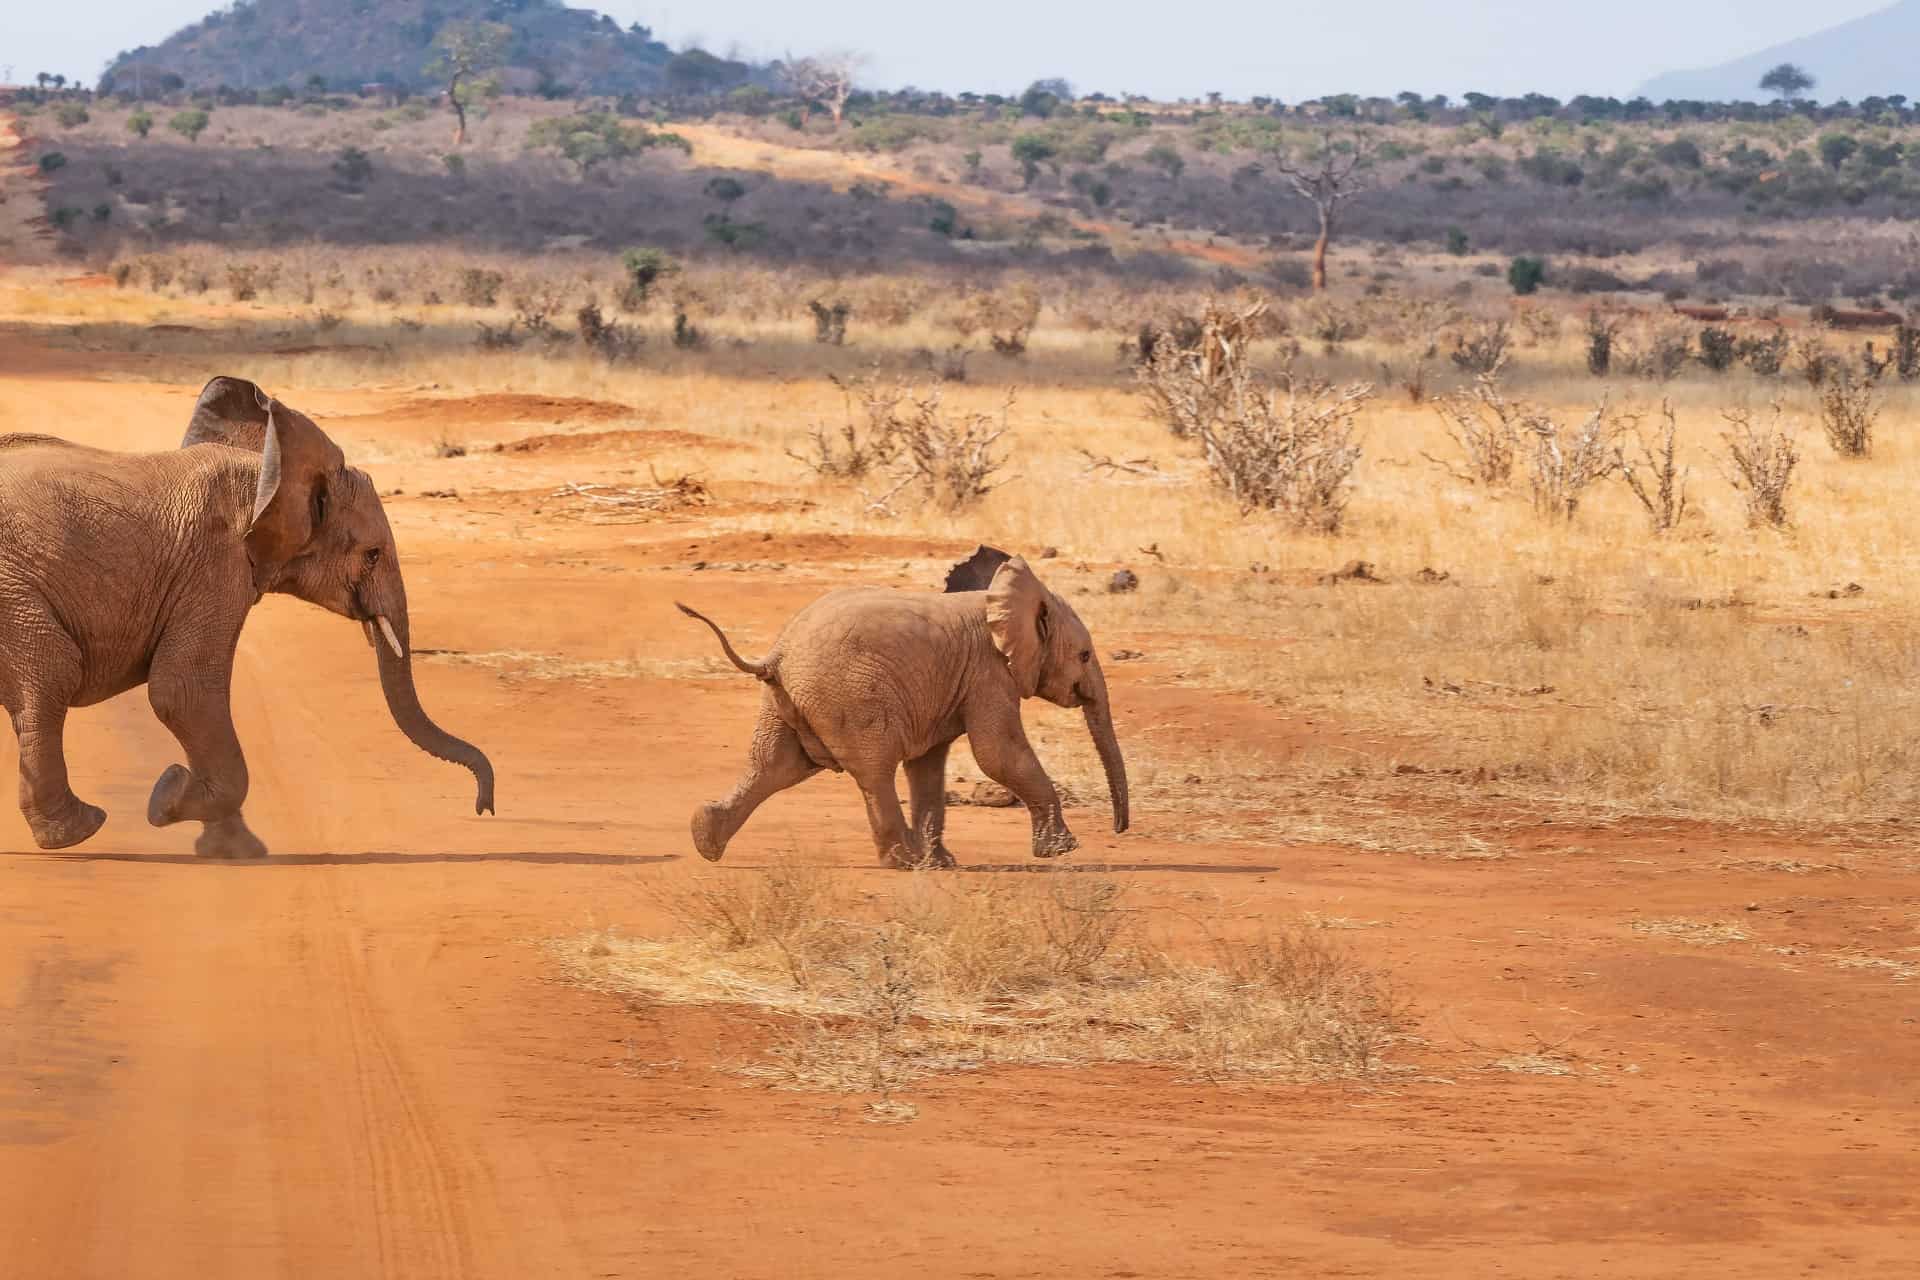 Elephants at kenya safari